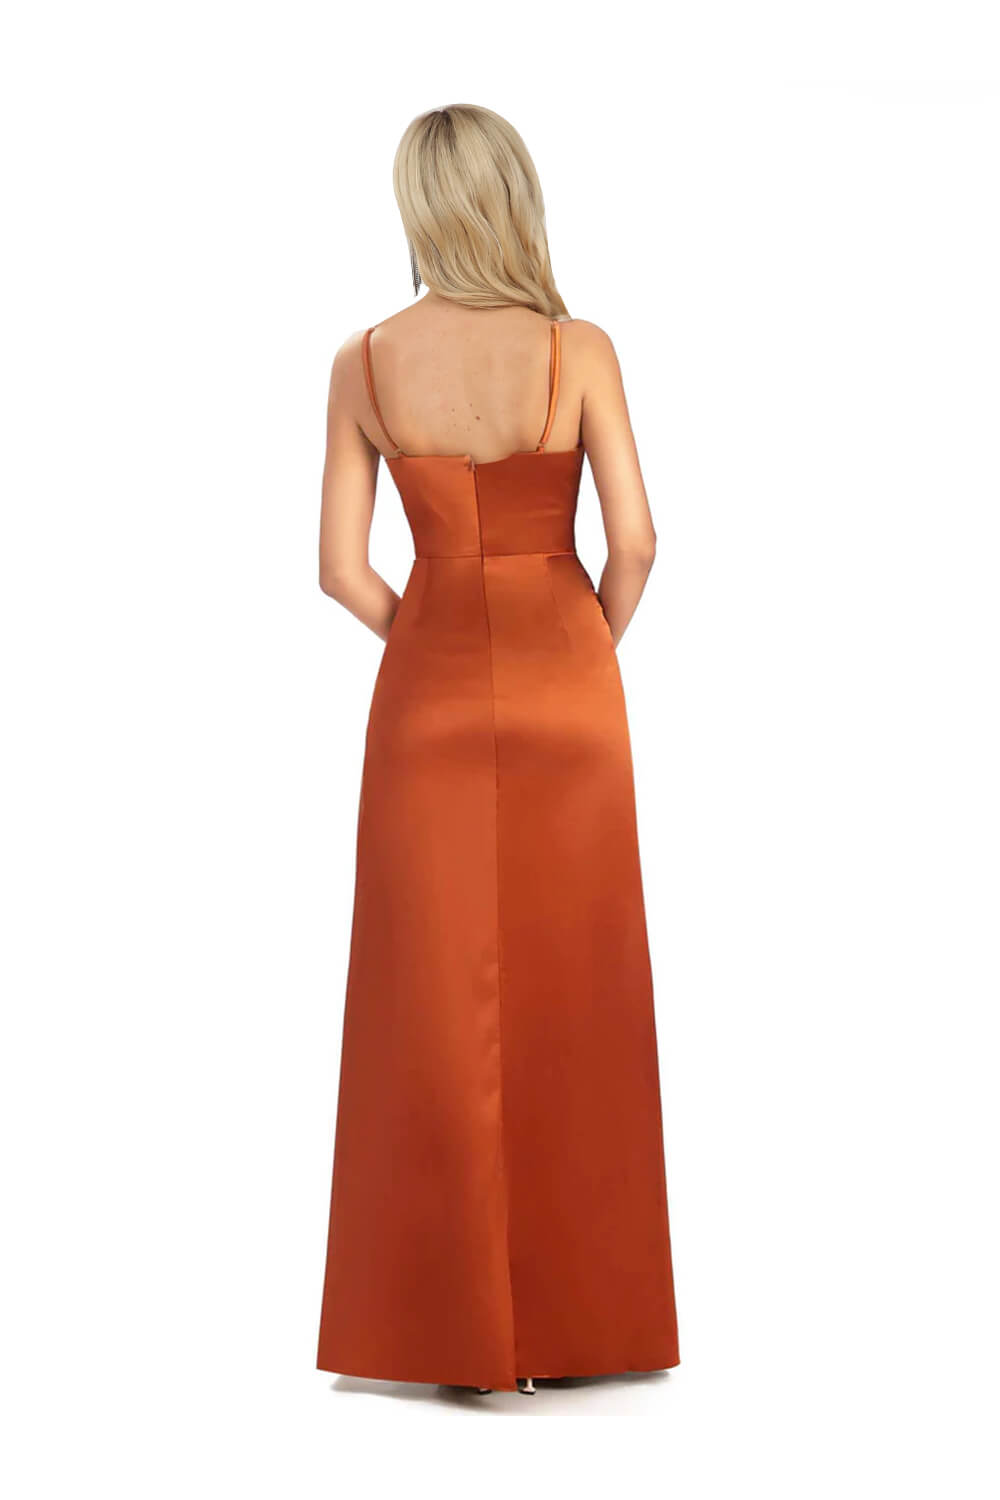 Hebochic Burnt Orange Soft Satin V-Neck Spaghetti Straps Side-Slit Floor-Length Bridesmaid Dresses Evening Prom Dress